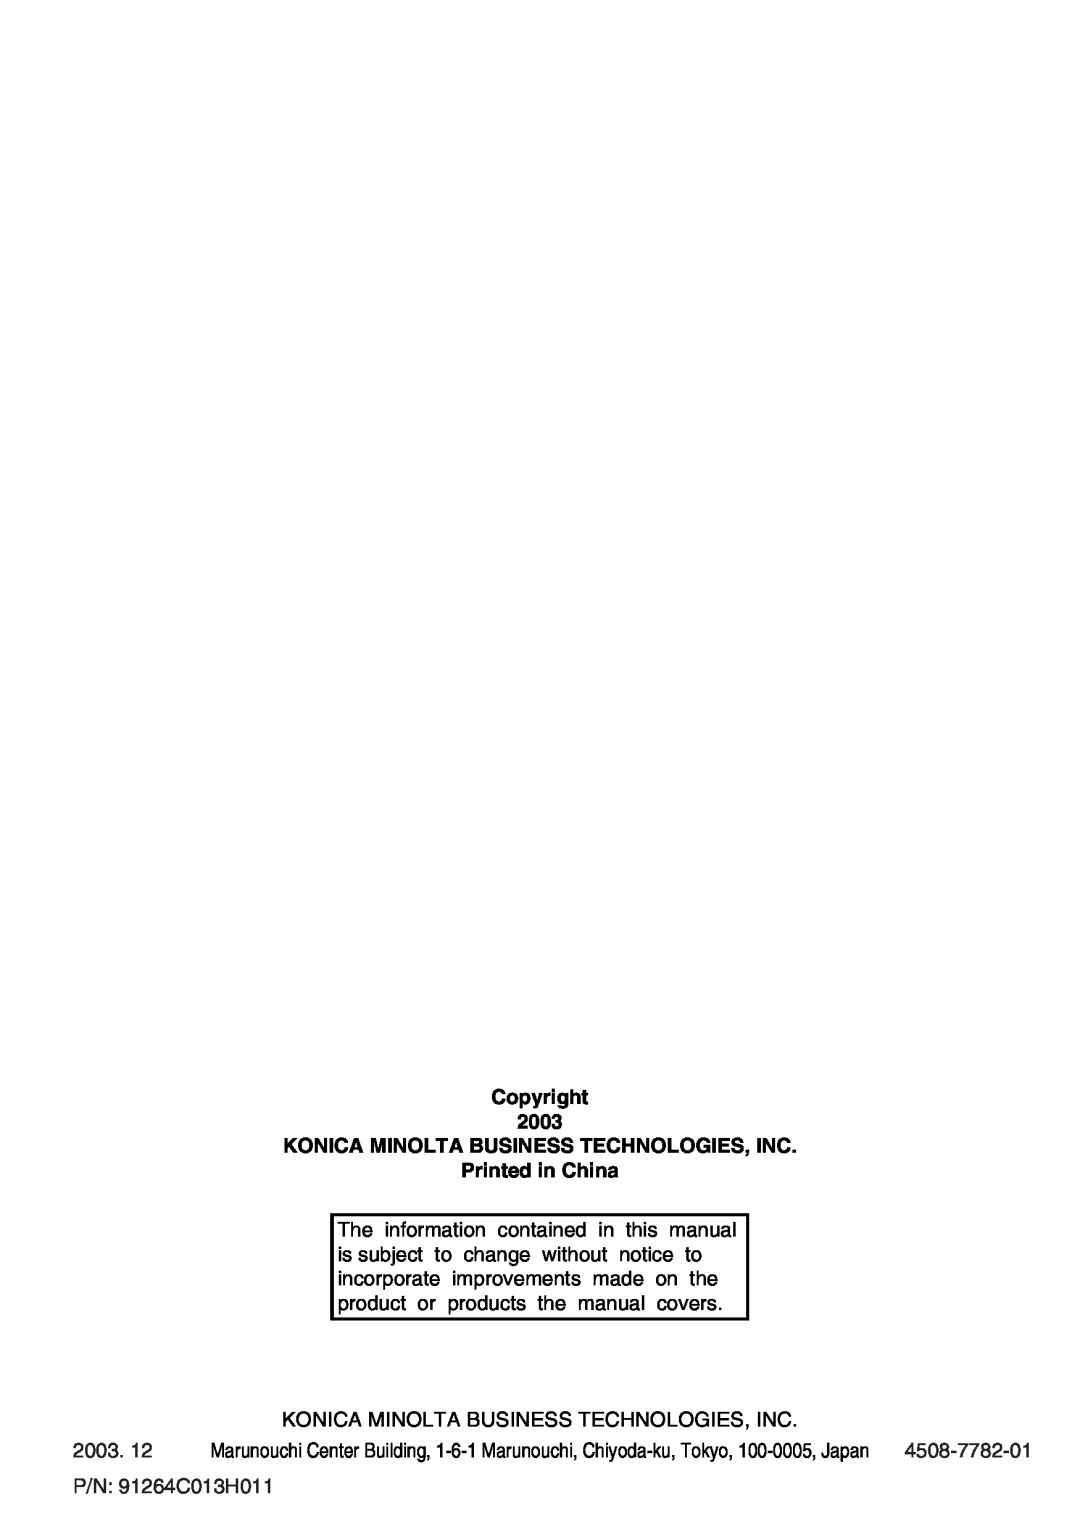 Konica Minolta NC-6 user manual Copyright 2003 KONICA MINOLTA BUSINESS TECHNOLOGIES, INC, Printed in China, 4508-7782-01 